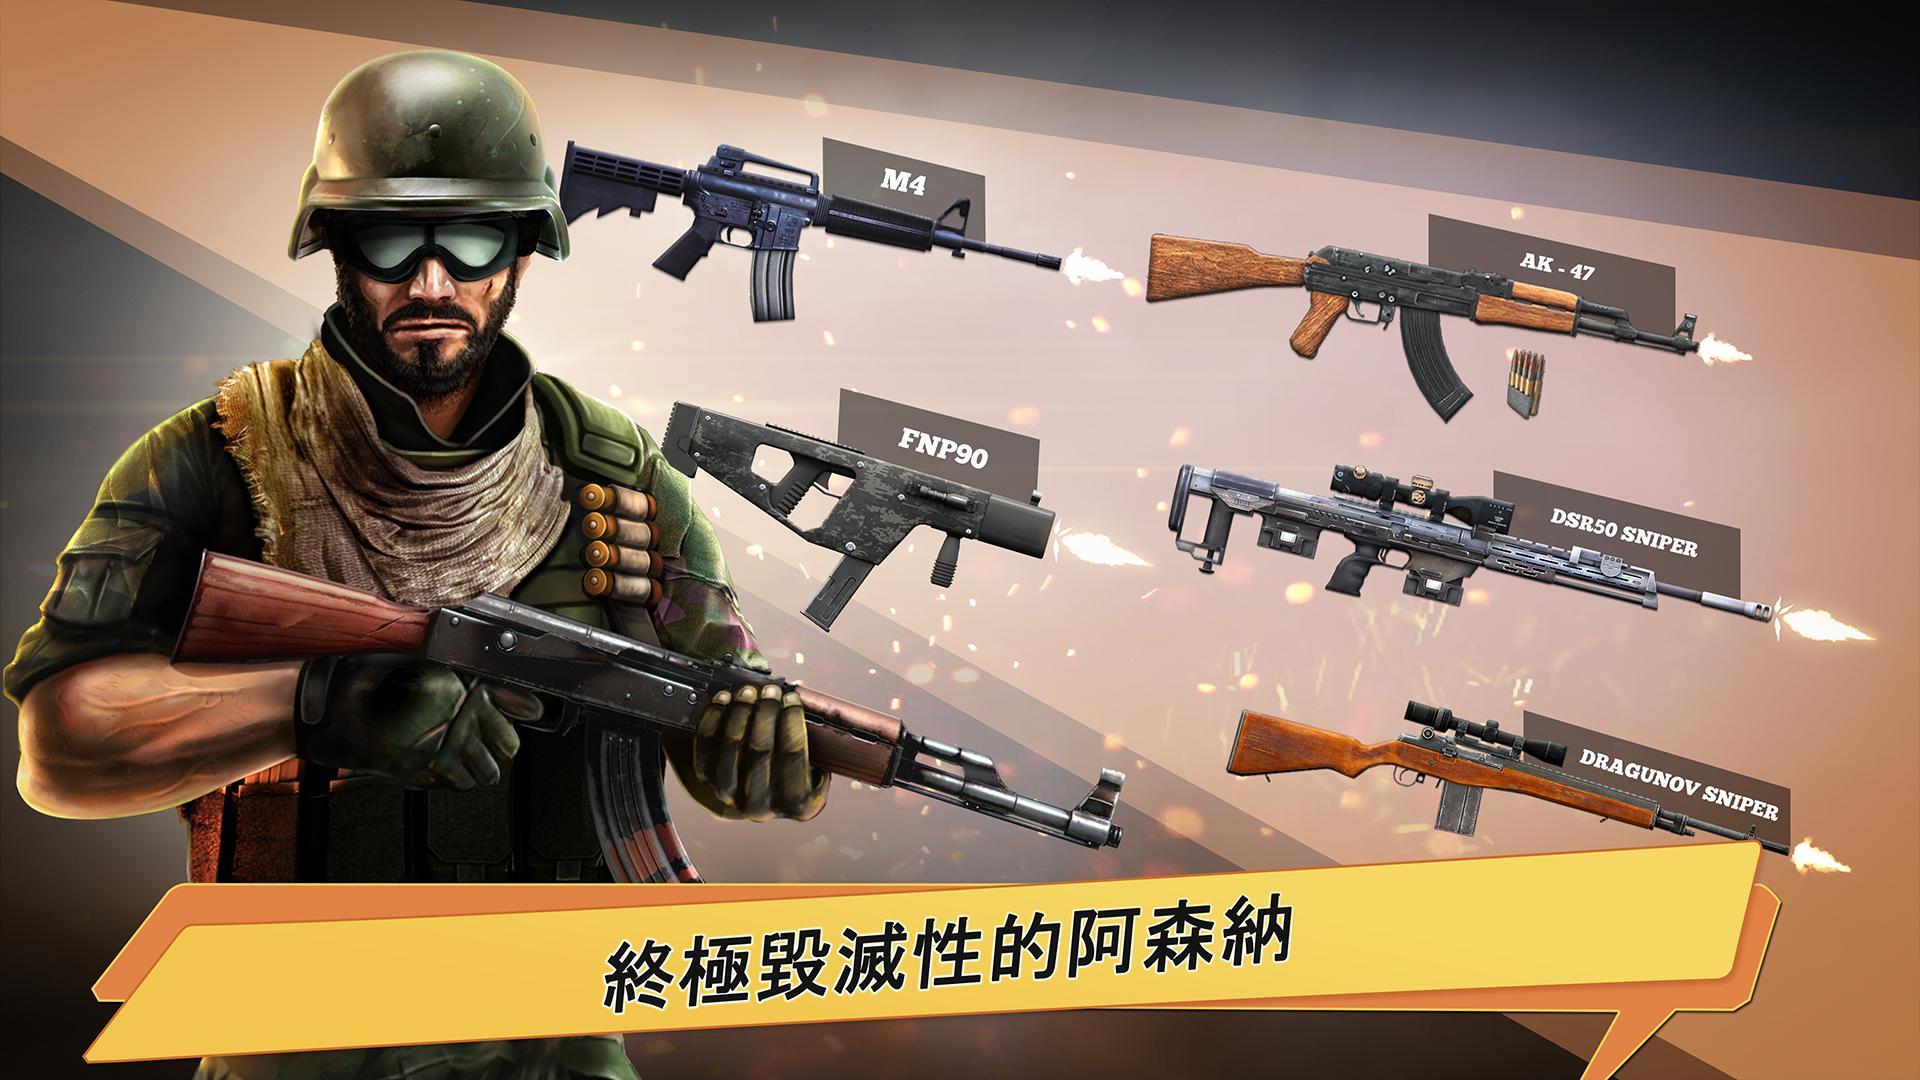 Screenshot of Yalghaar: The Game - Commando Action FPS  Shooter